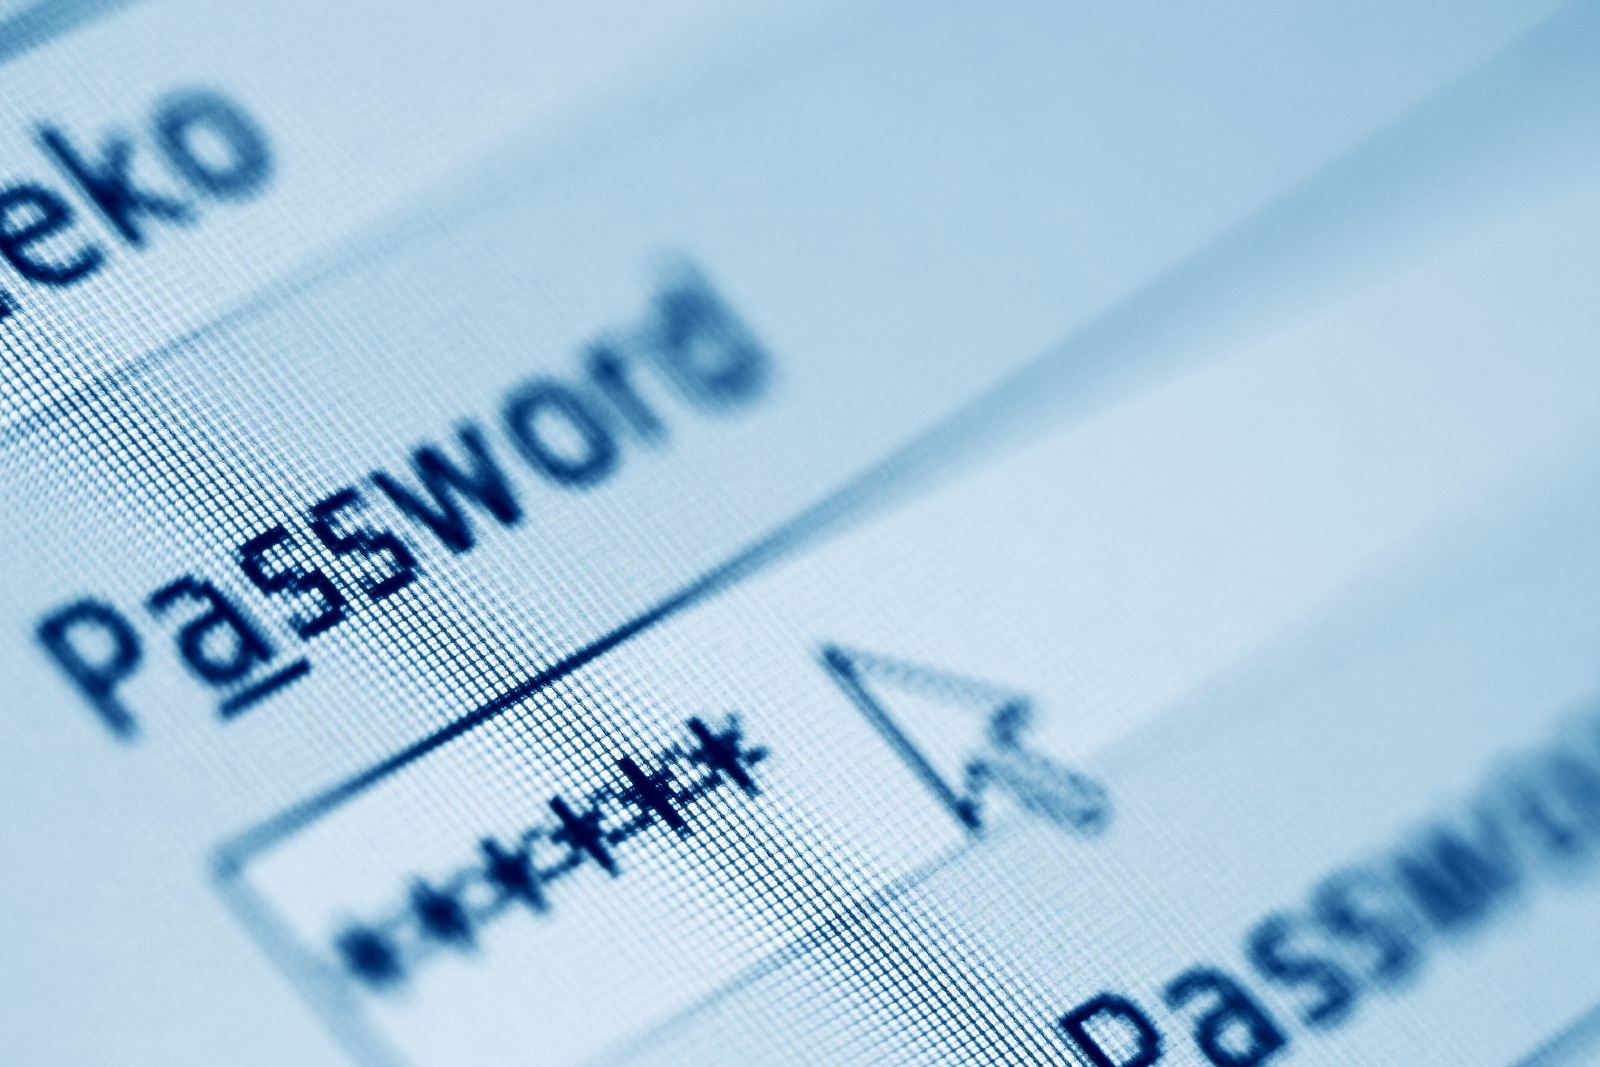 password security best practices guidelines 